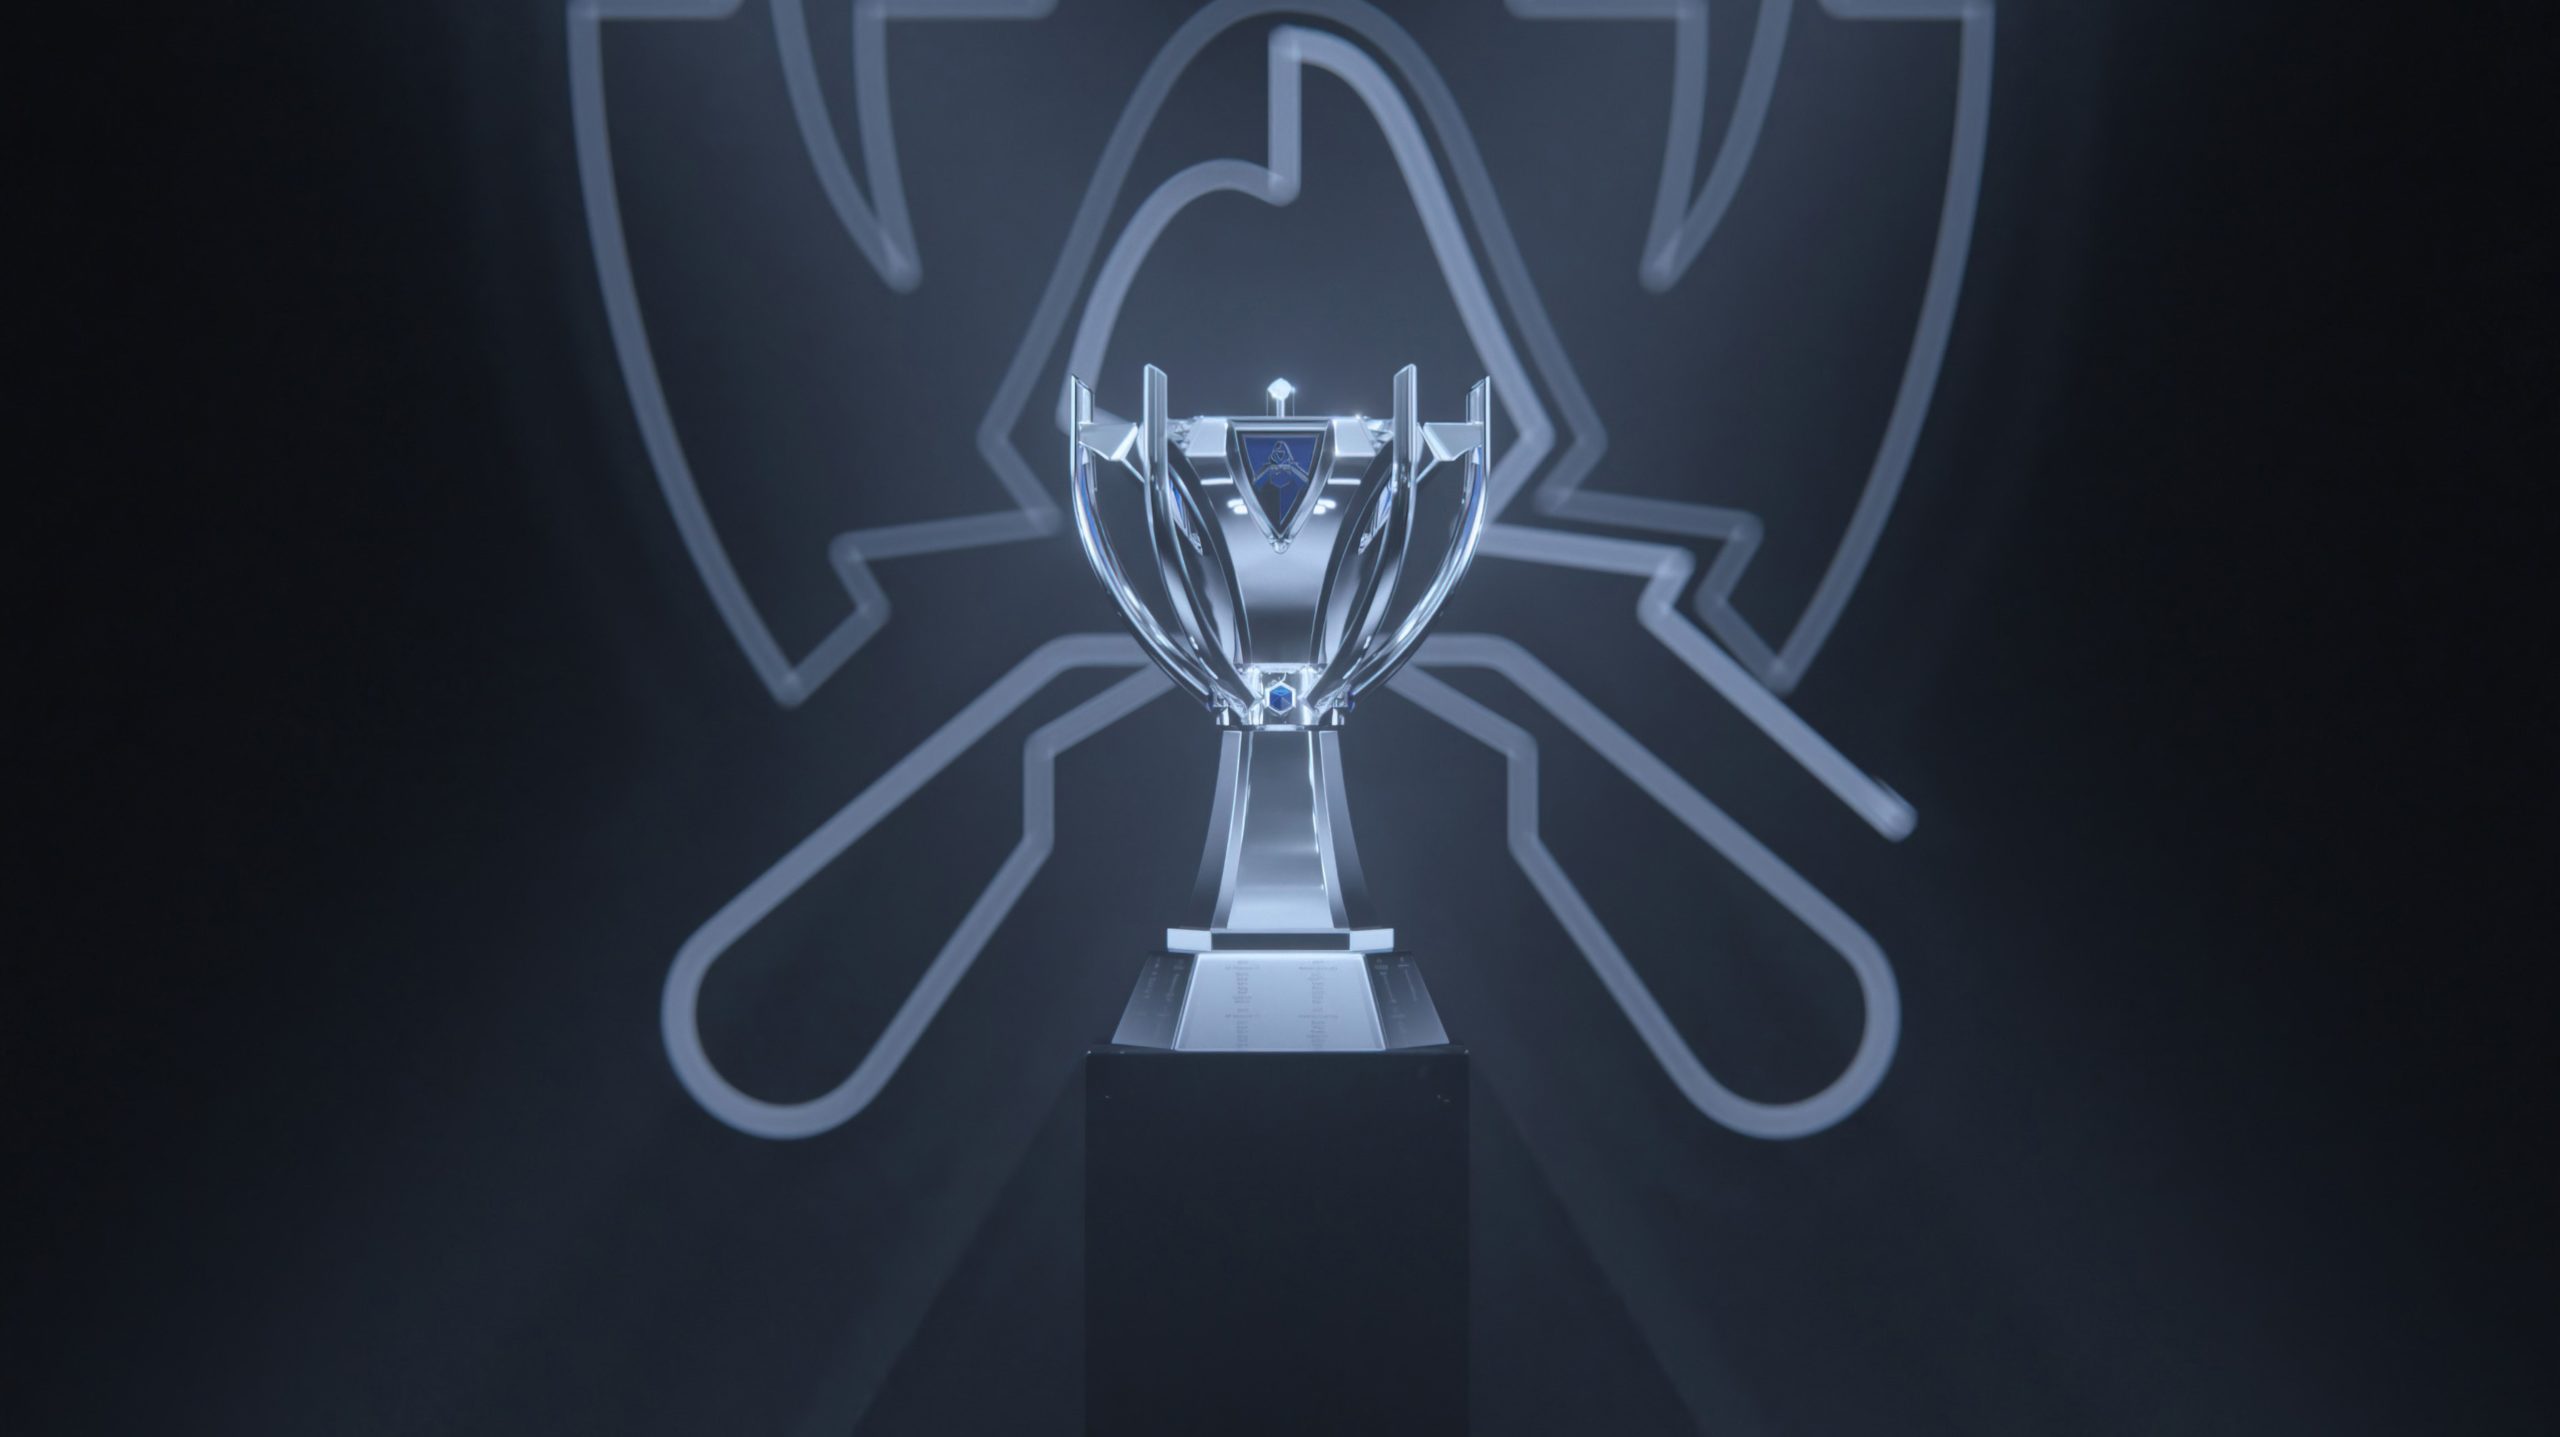 FPX wins second League of Legends World Championship title for LPL